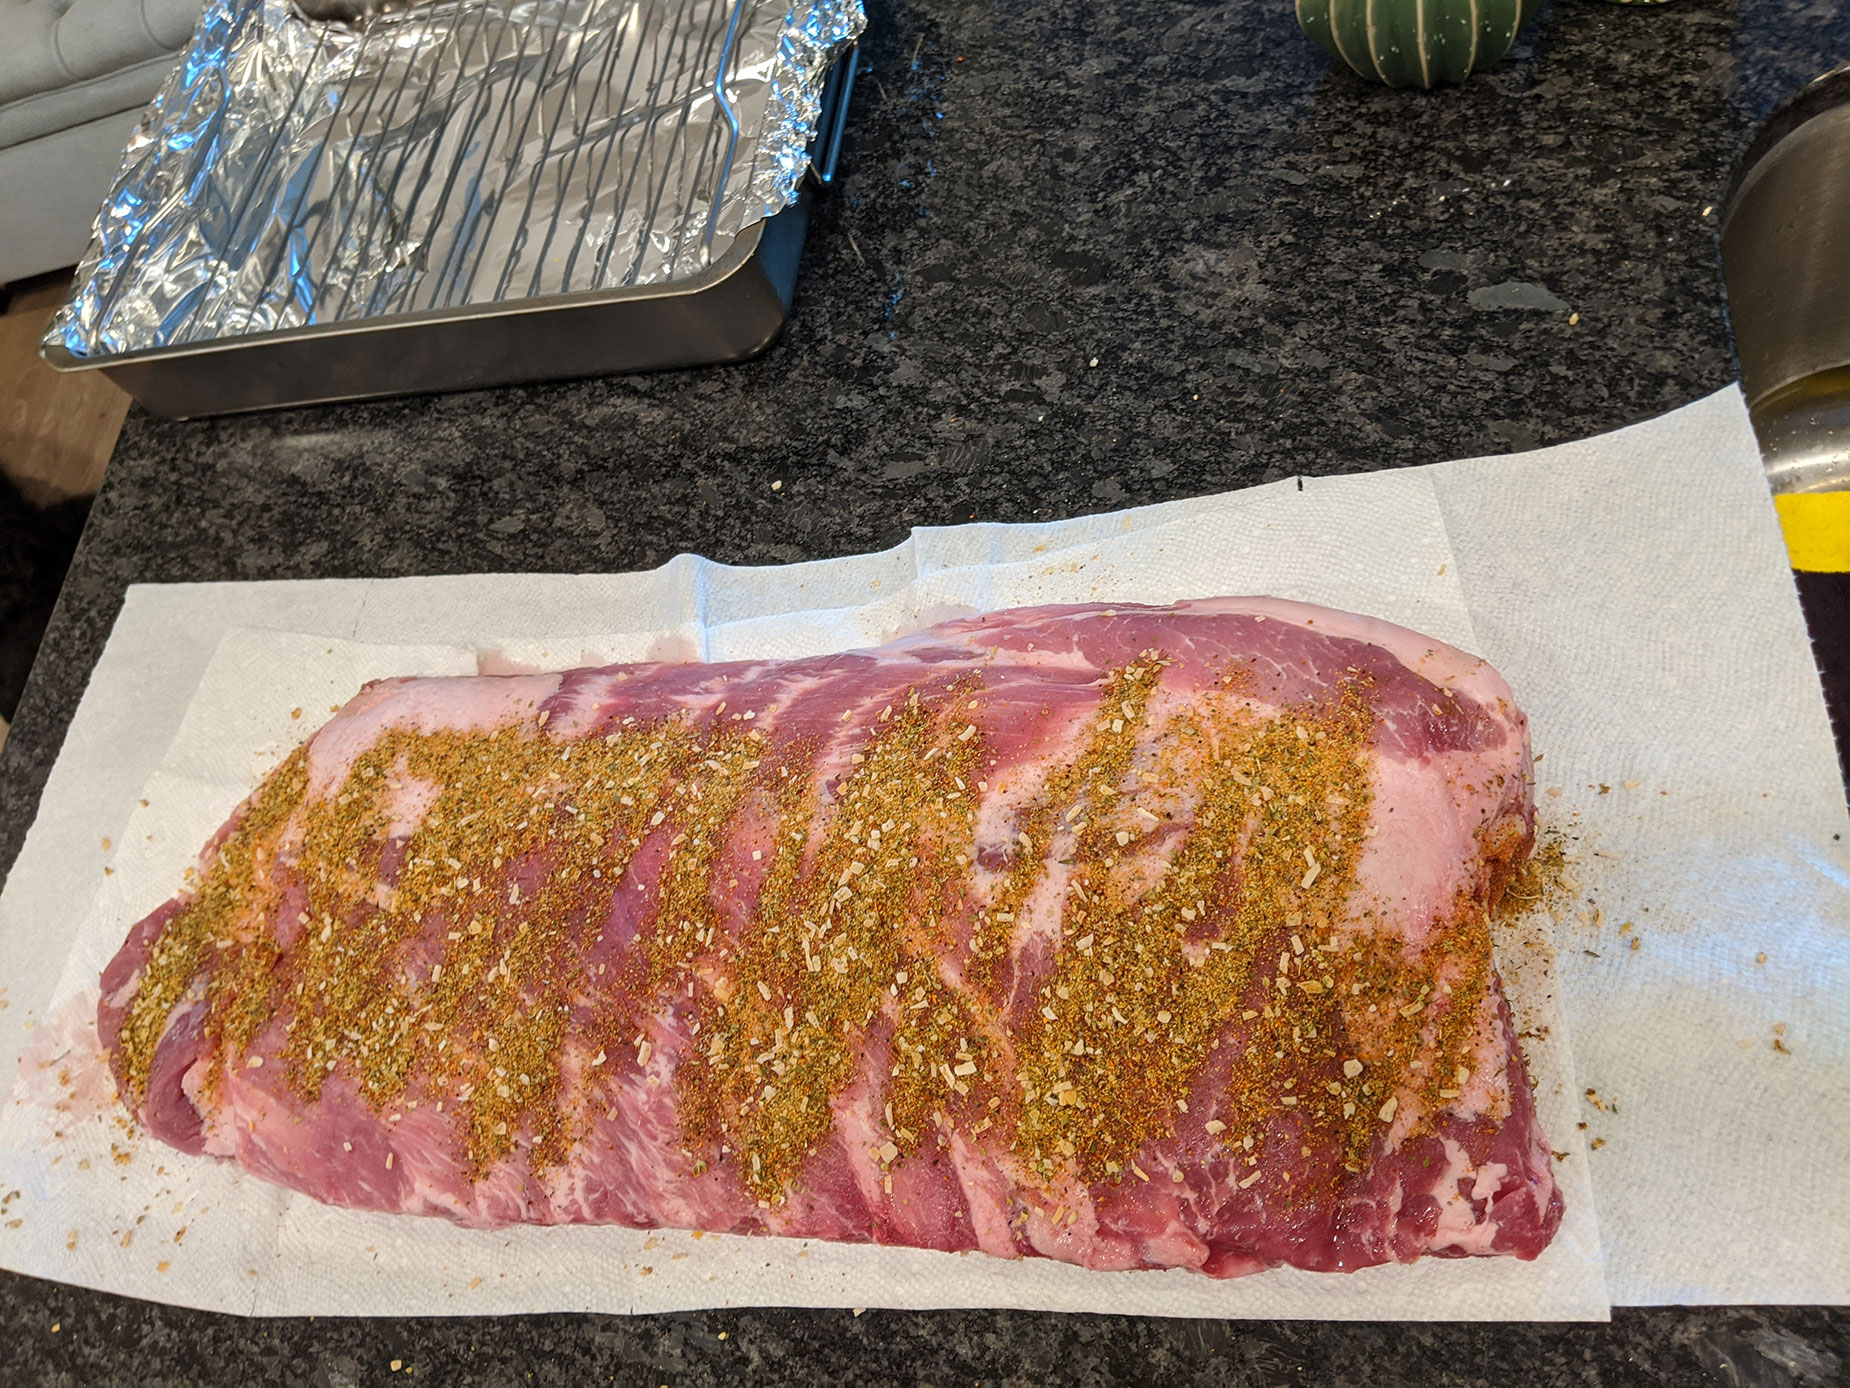 Seasoning the pork ribs.